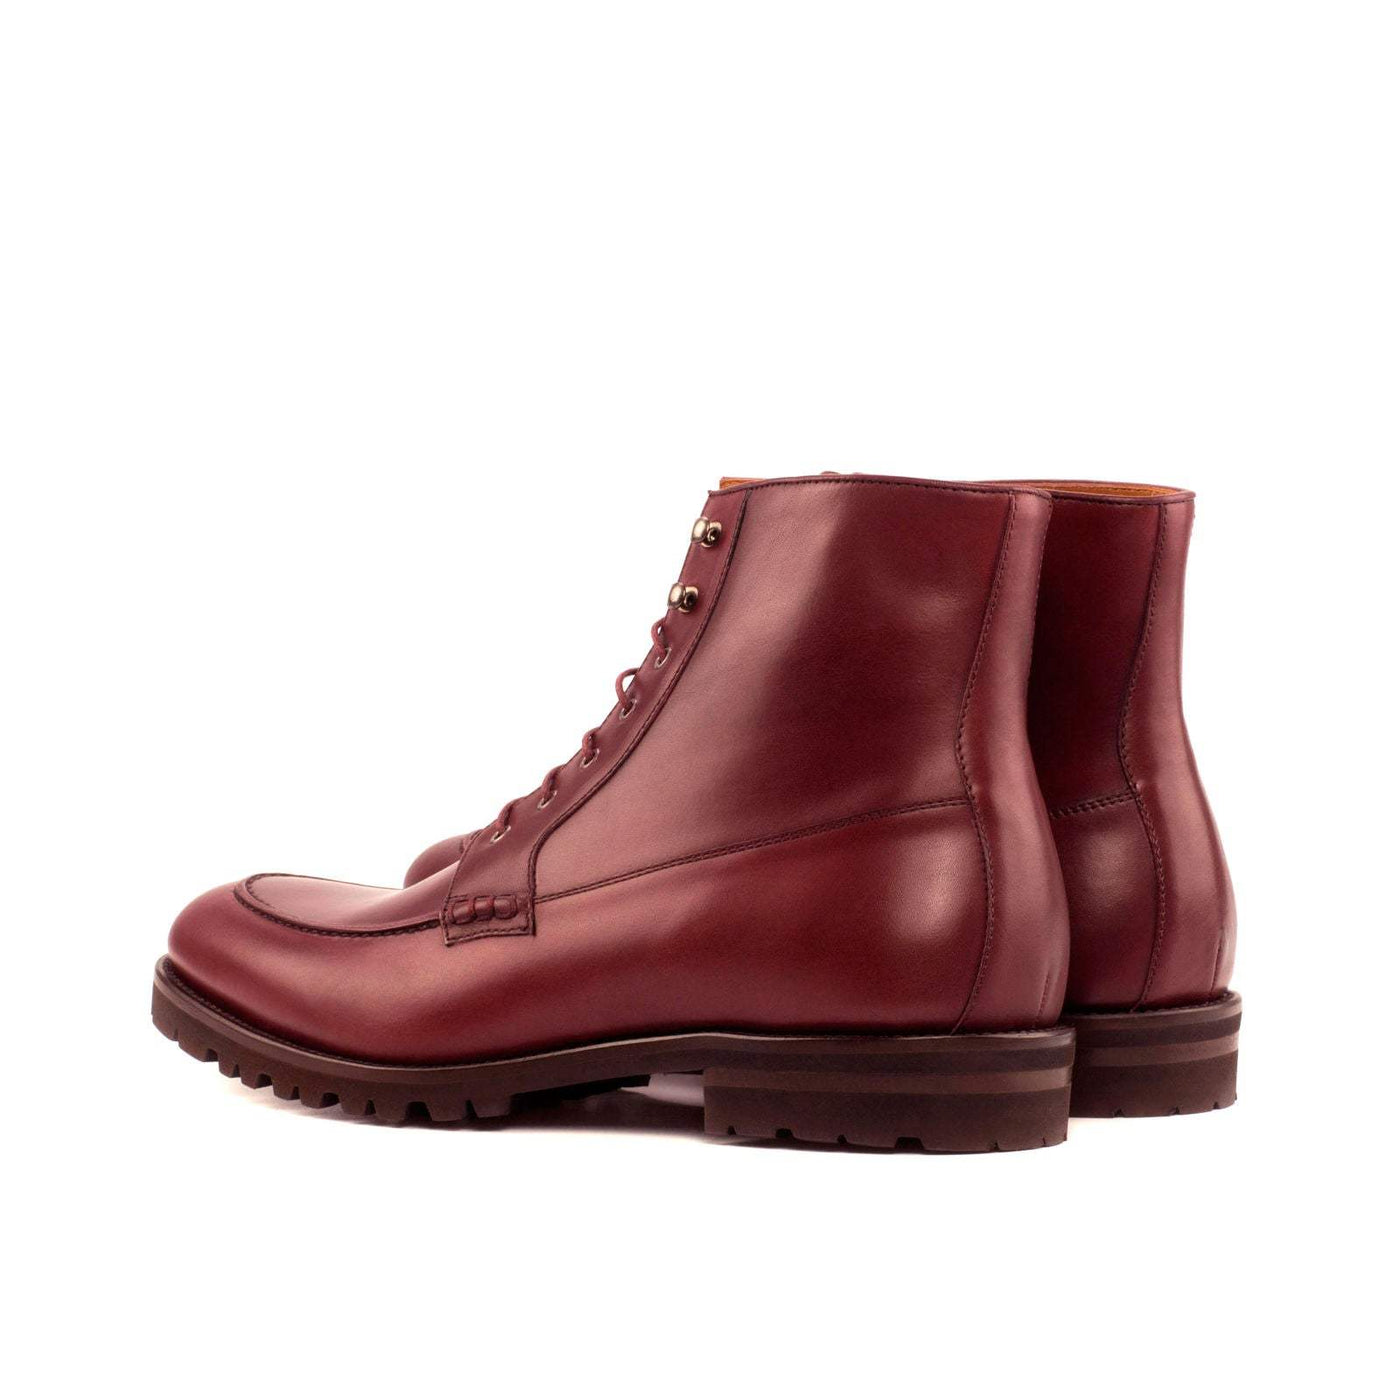 Men's Moc Boots Leather Burgundy 4040 2- MERRIMIUM